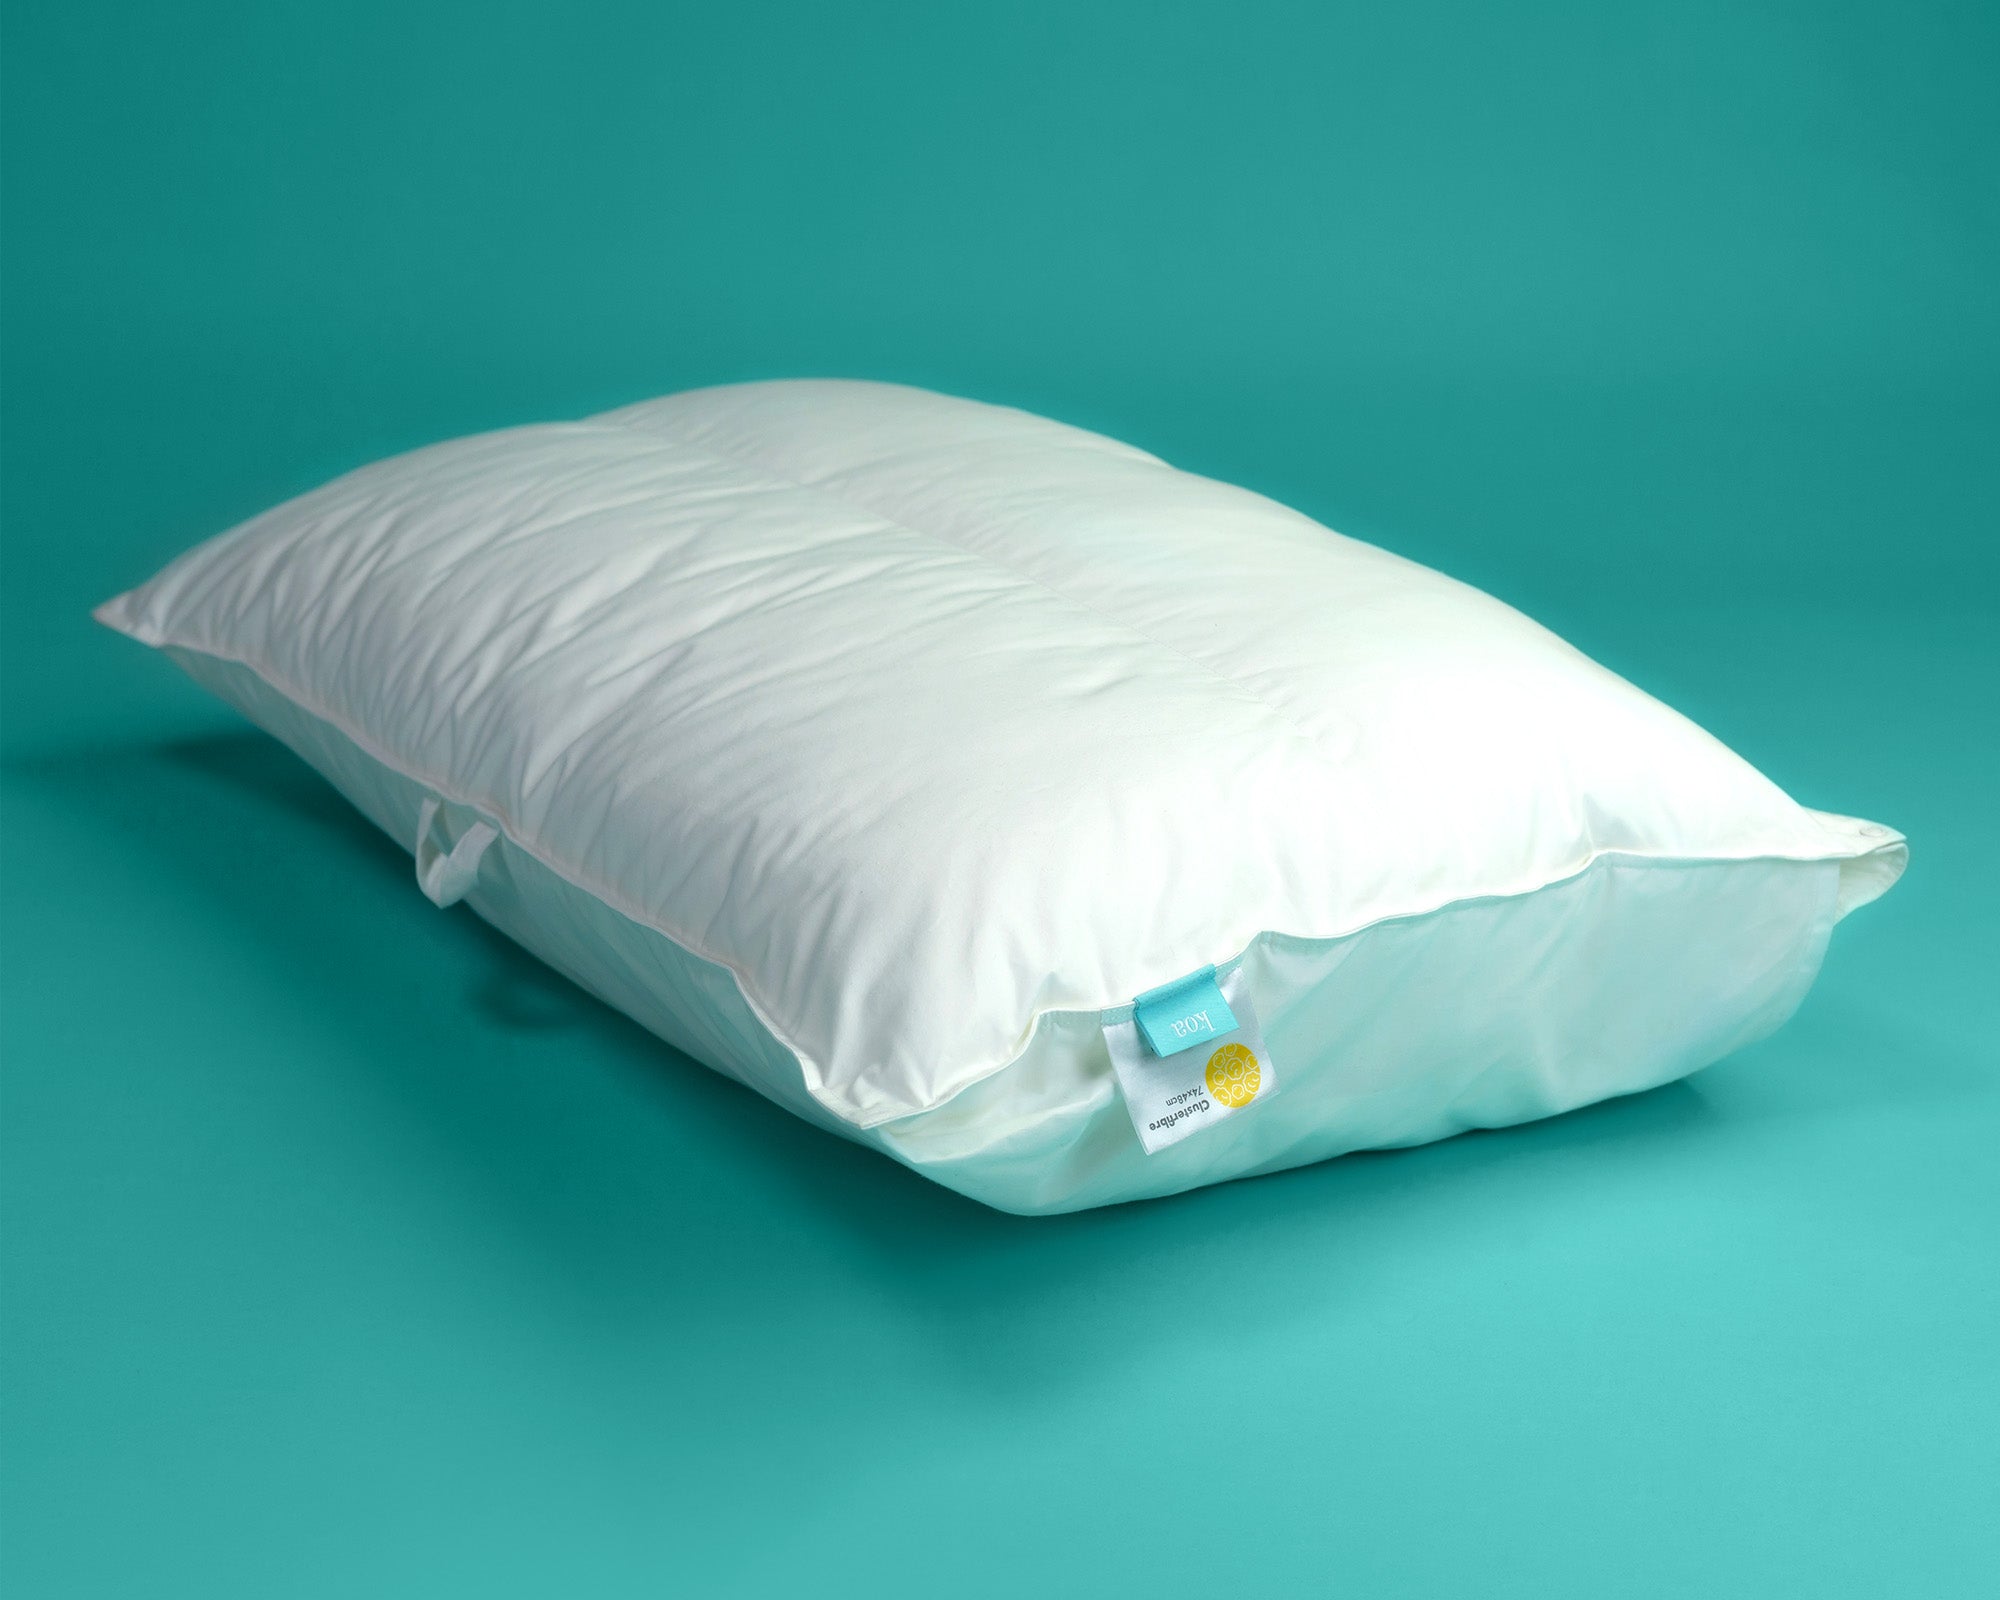 The Koa Pillow